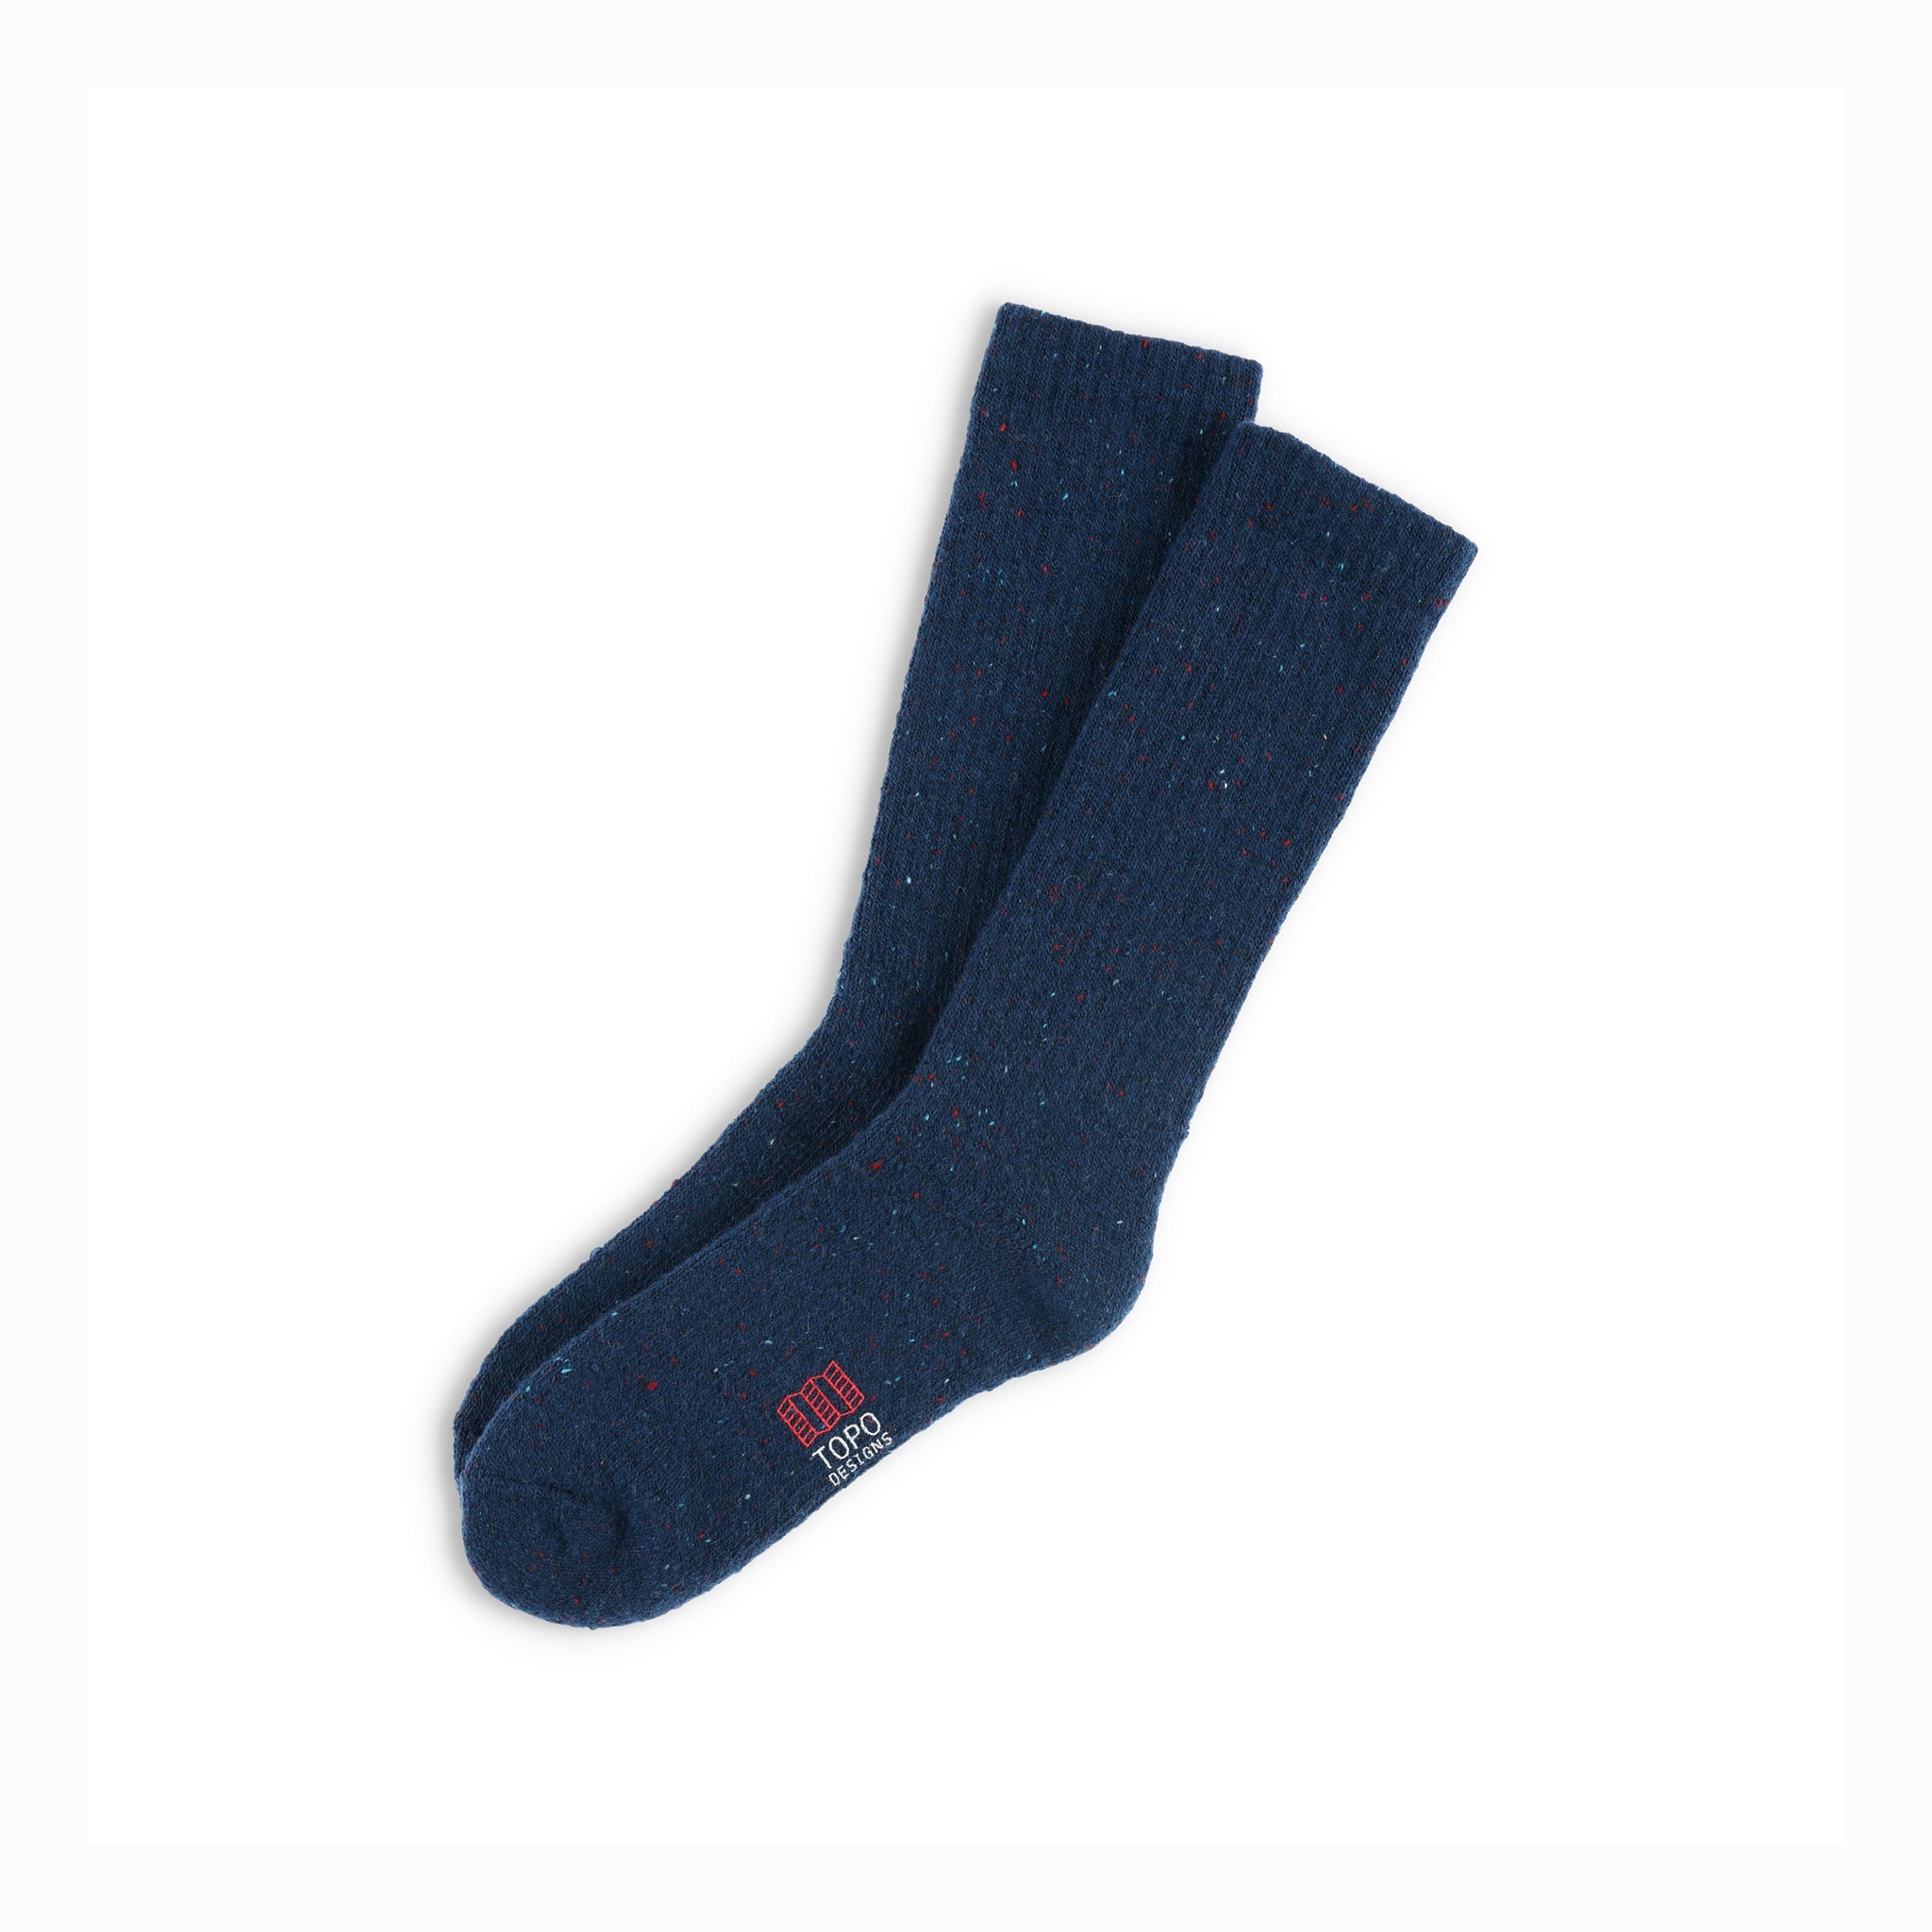 Topo Designs Mountain heavyweight wool blend hiking Socks in "Pond Blue".